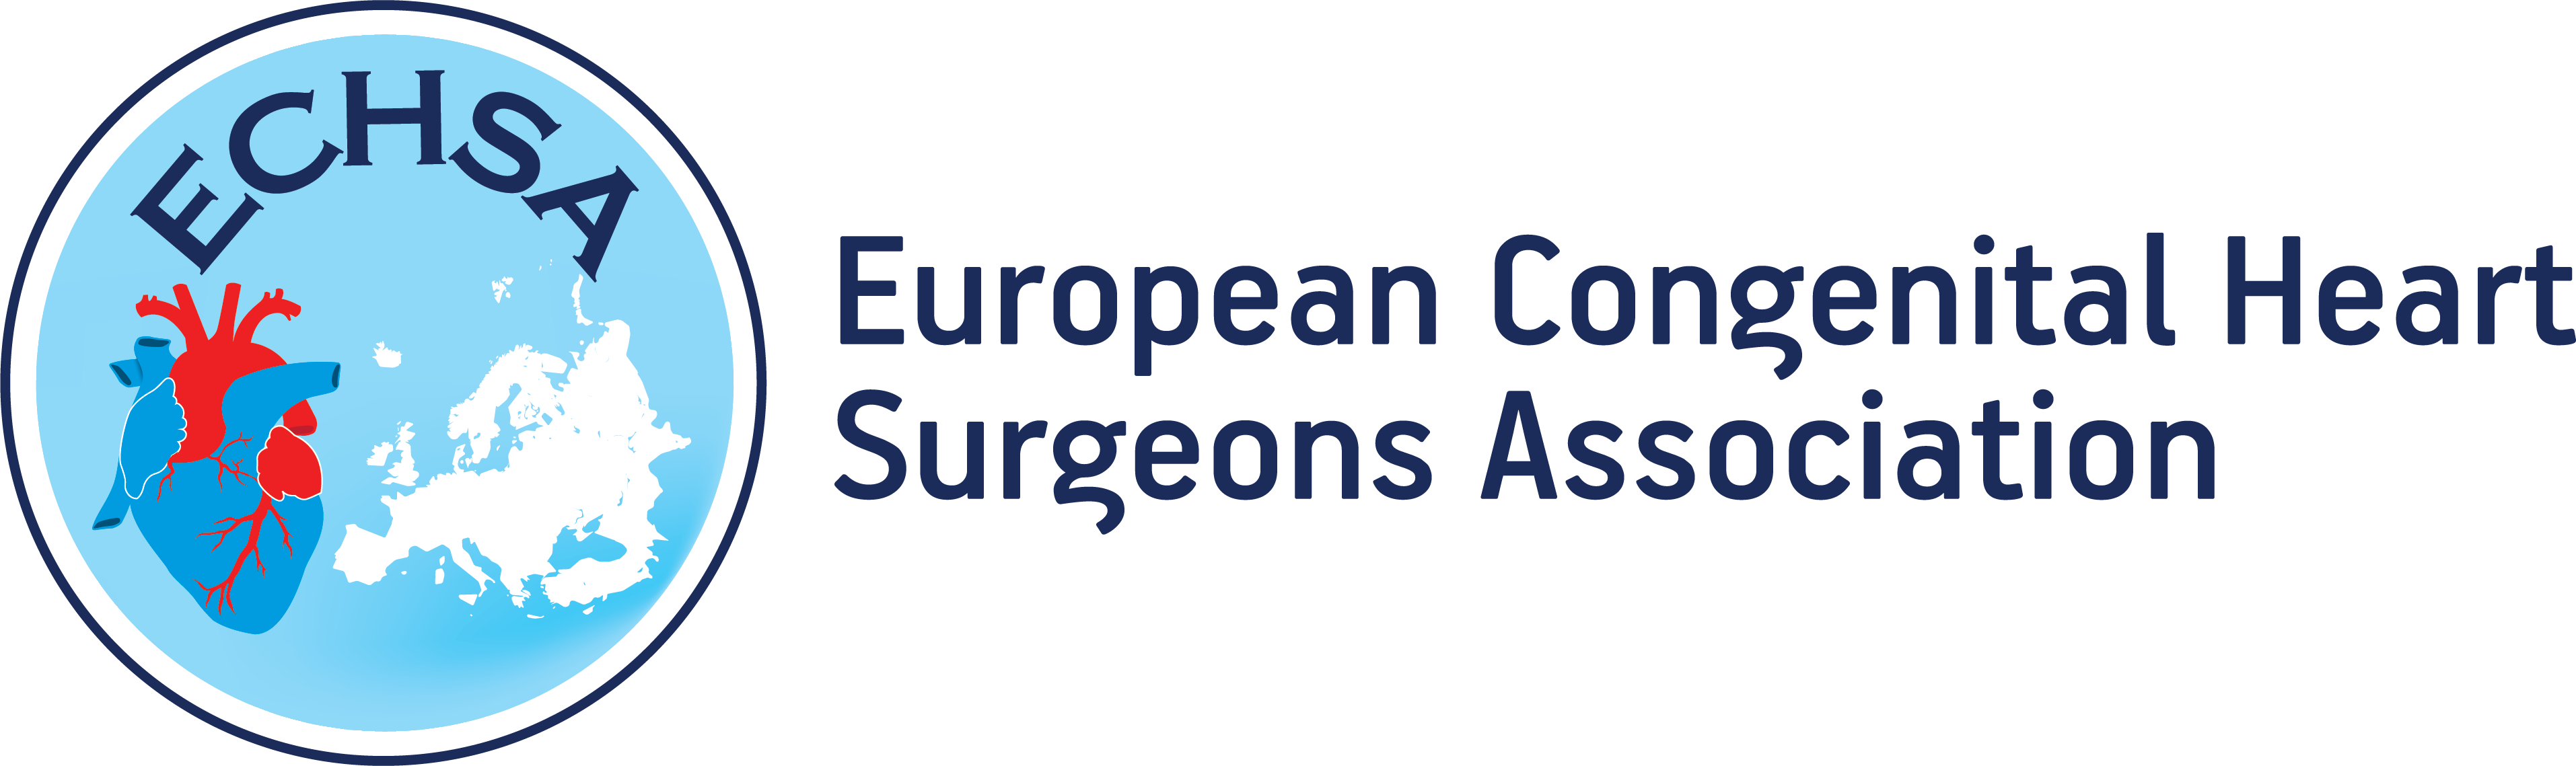 European Congenital Heart Surgeons Association